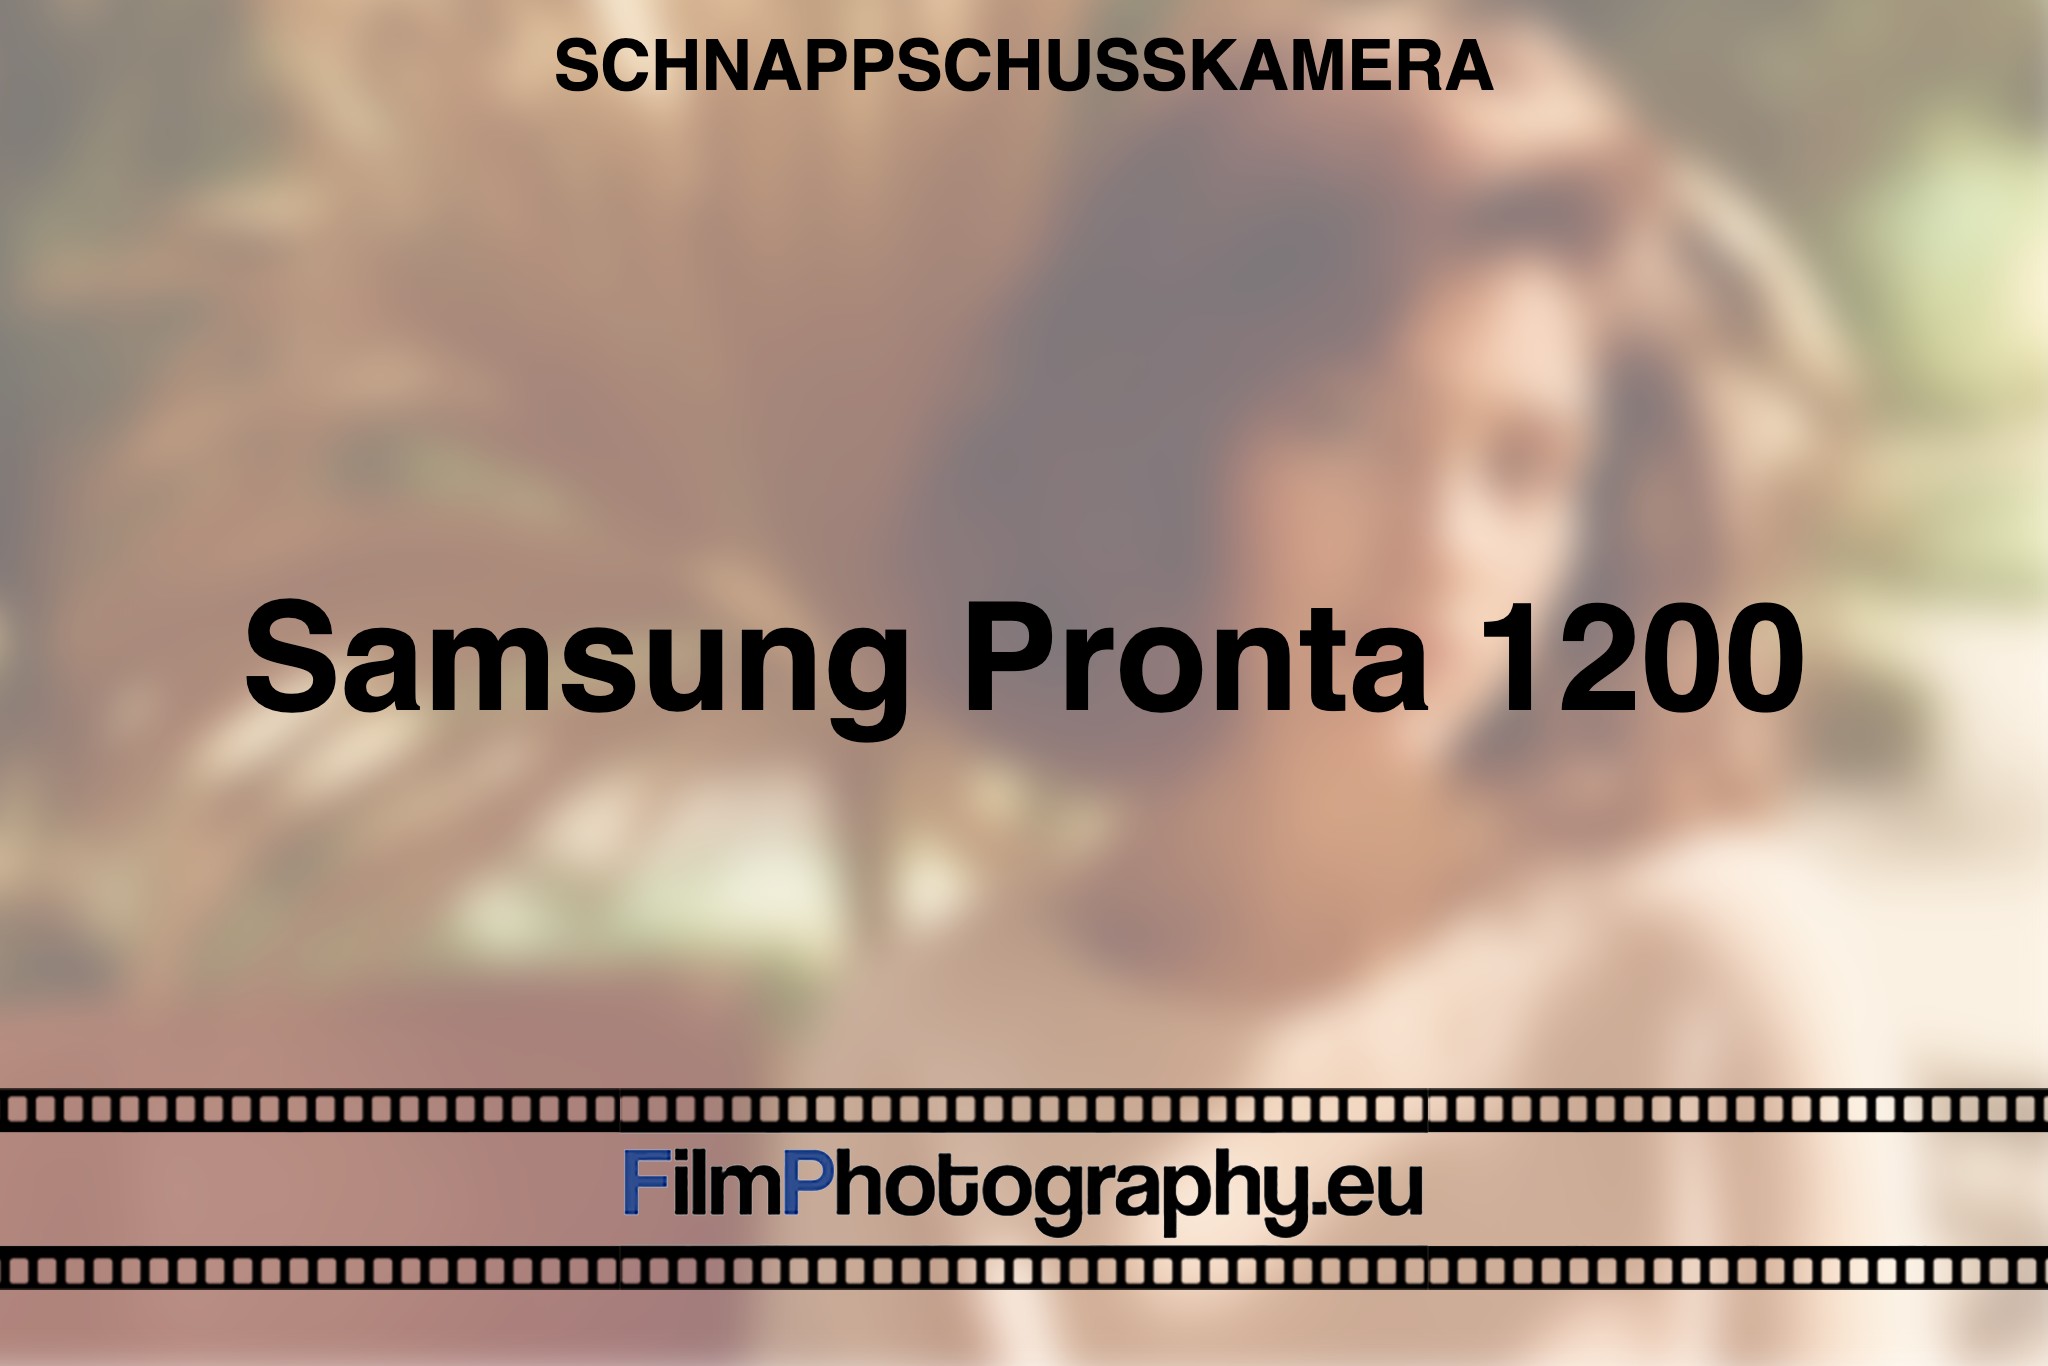 samsung-pronta-1200-schnappschusskamera-bnv